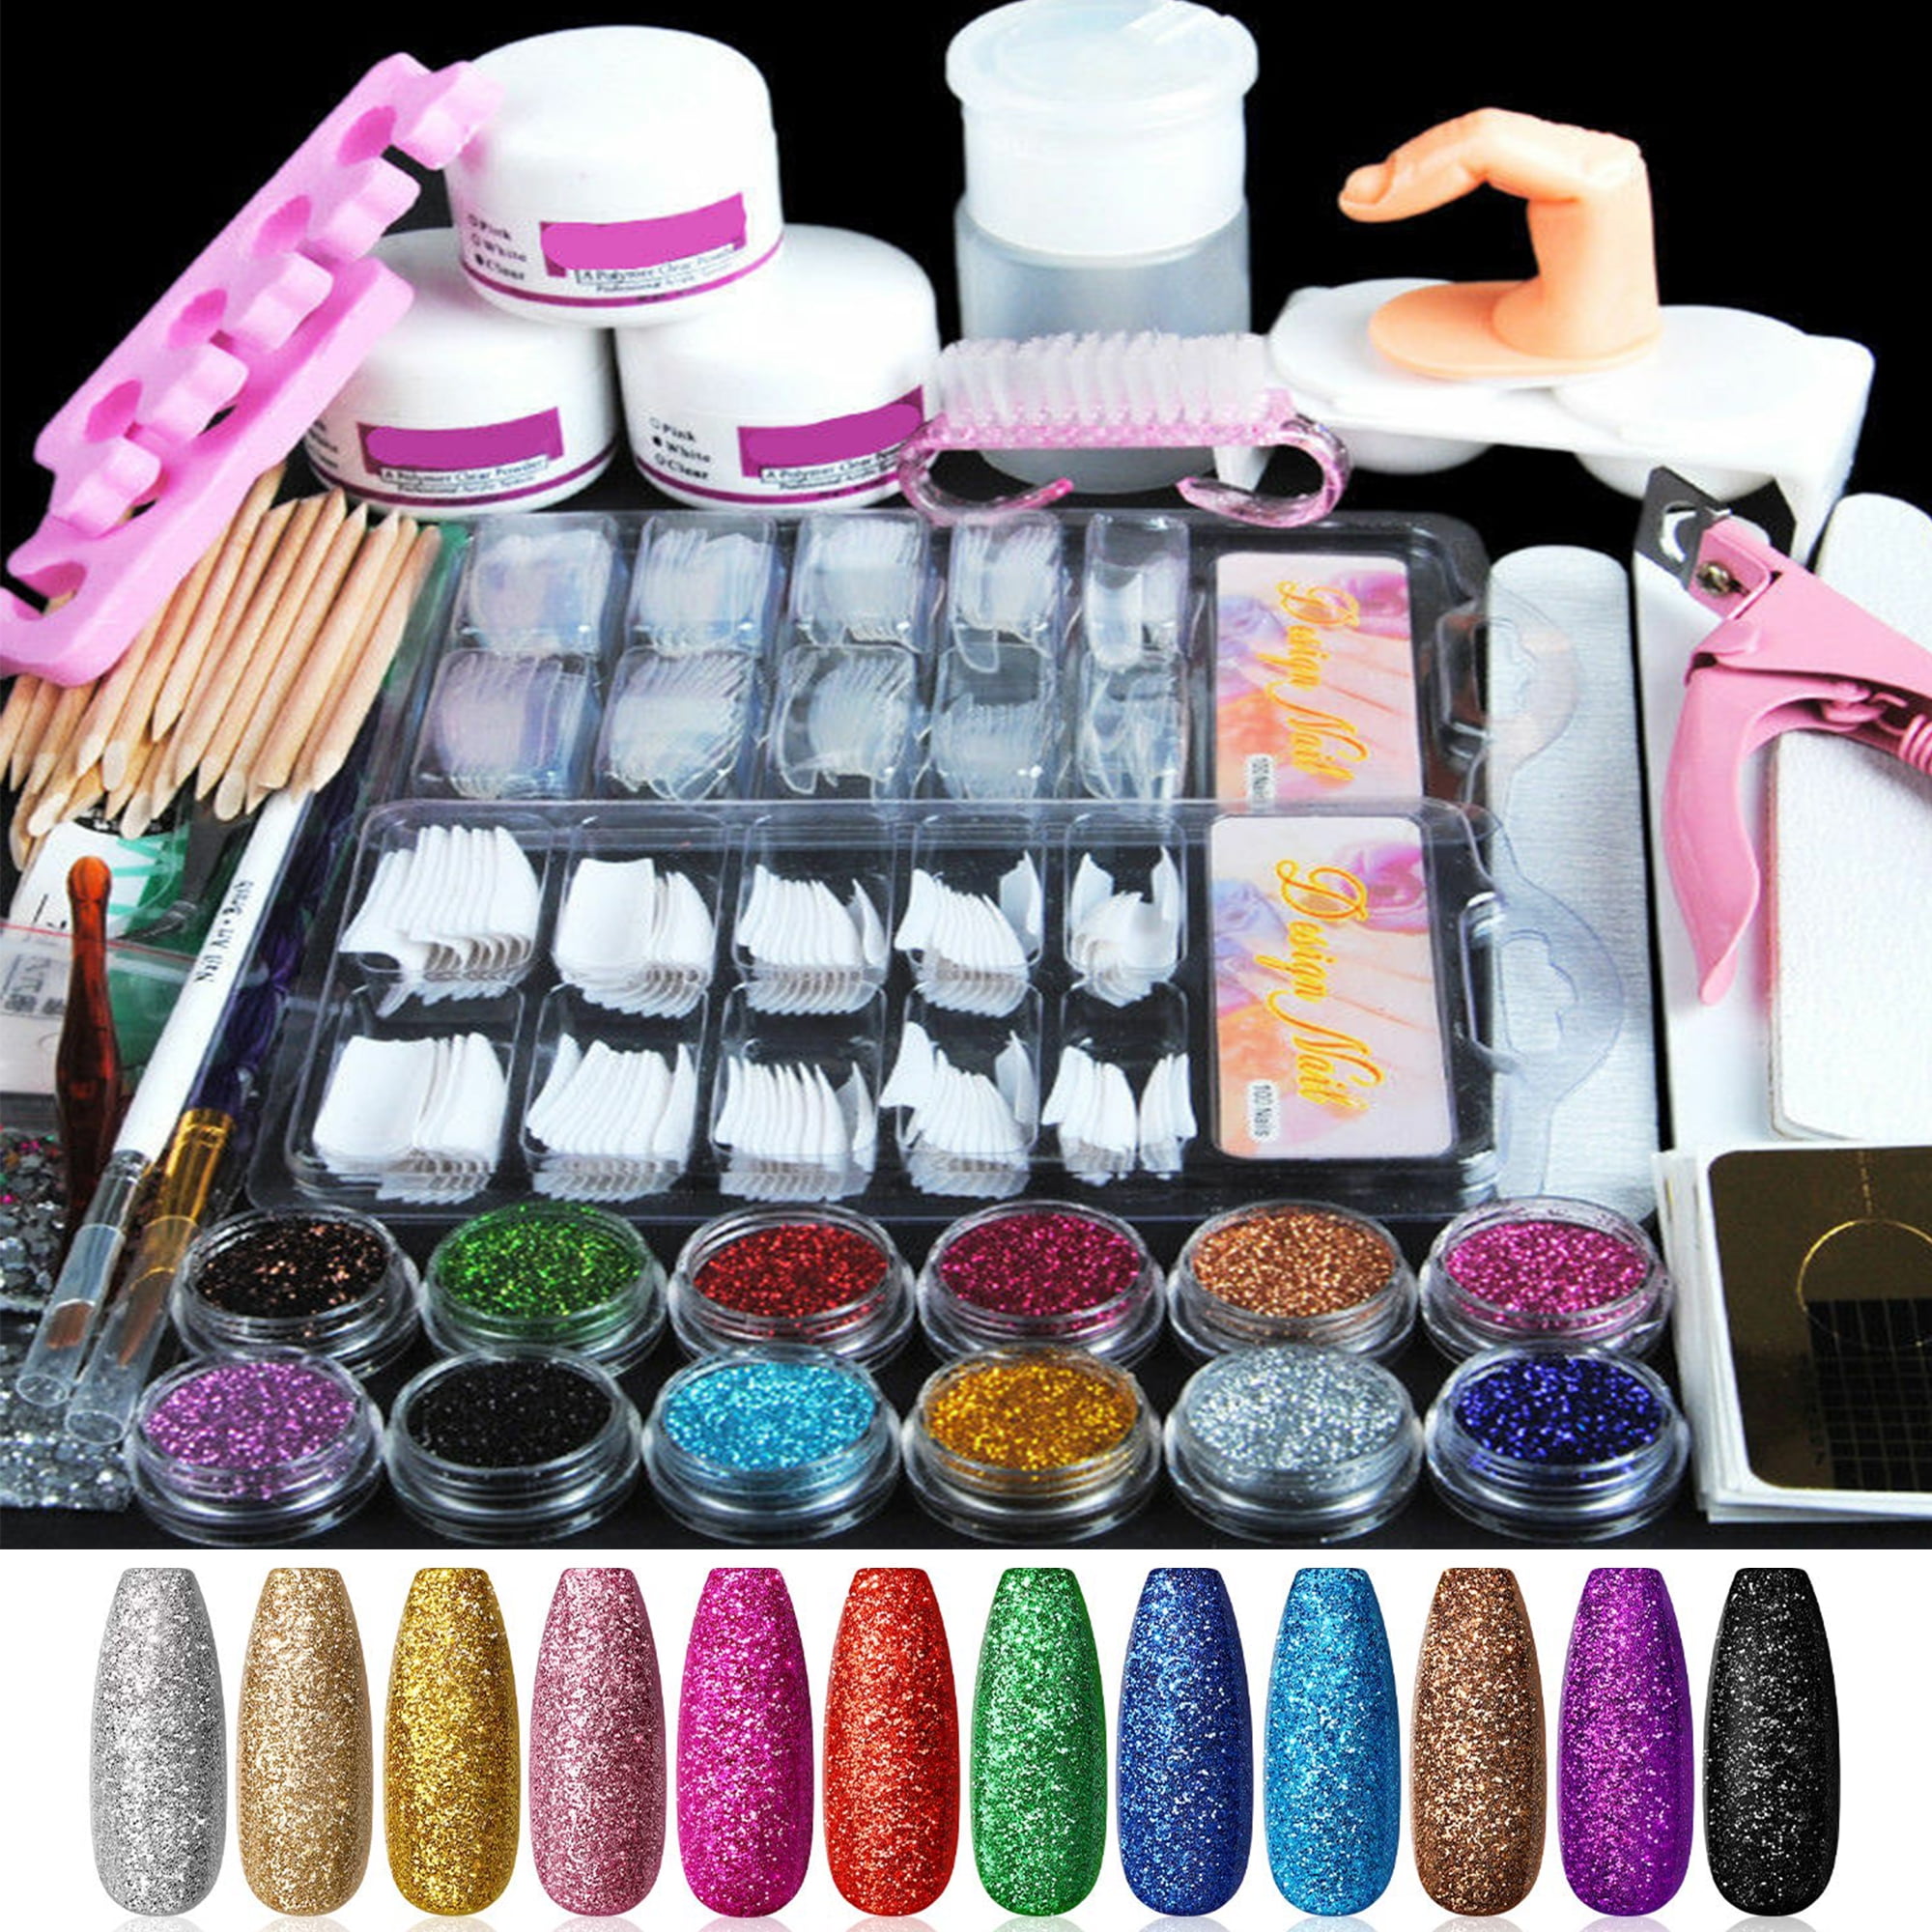 Acrylic Nail Kit, Glitter Acrylic Powder And Liquid Monomer Set for ...